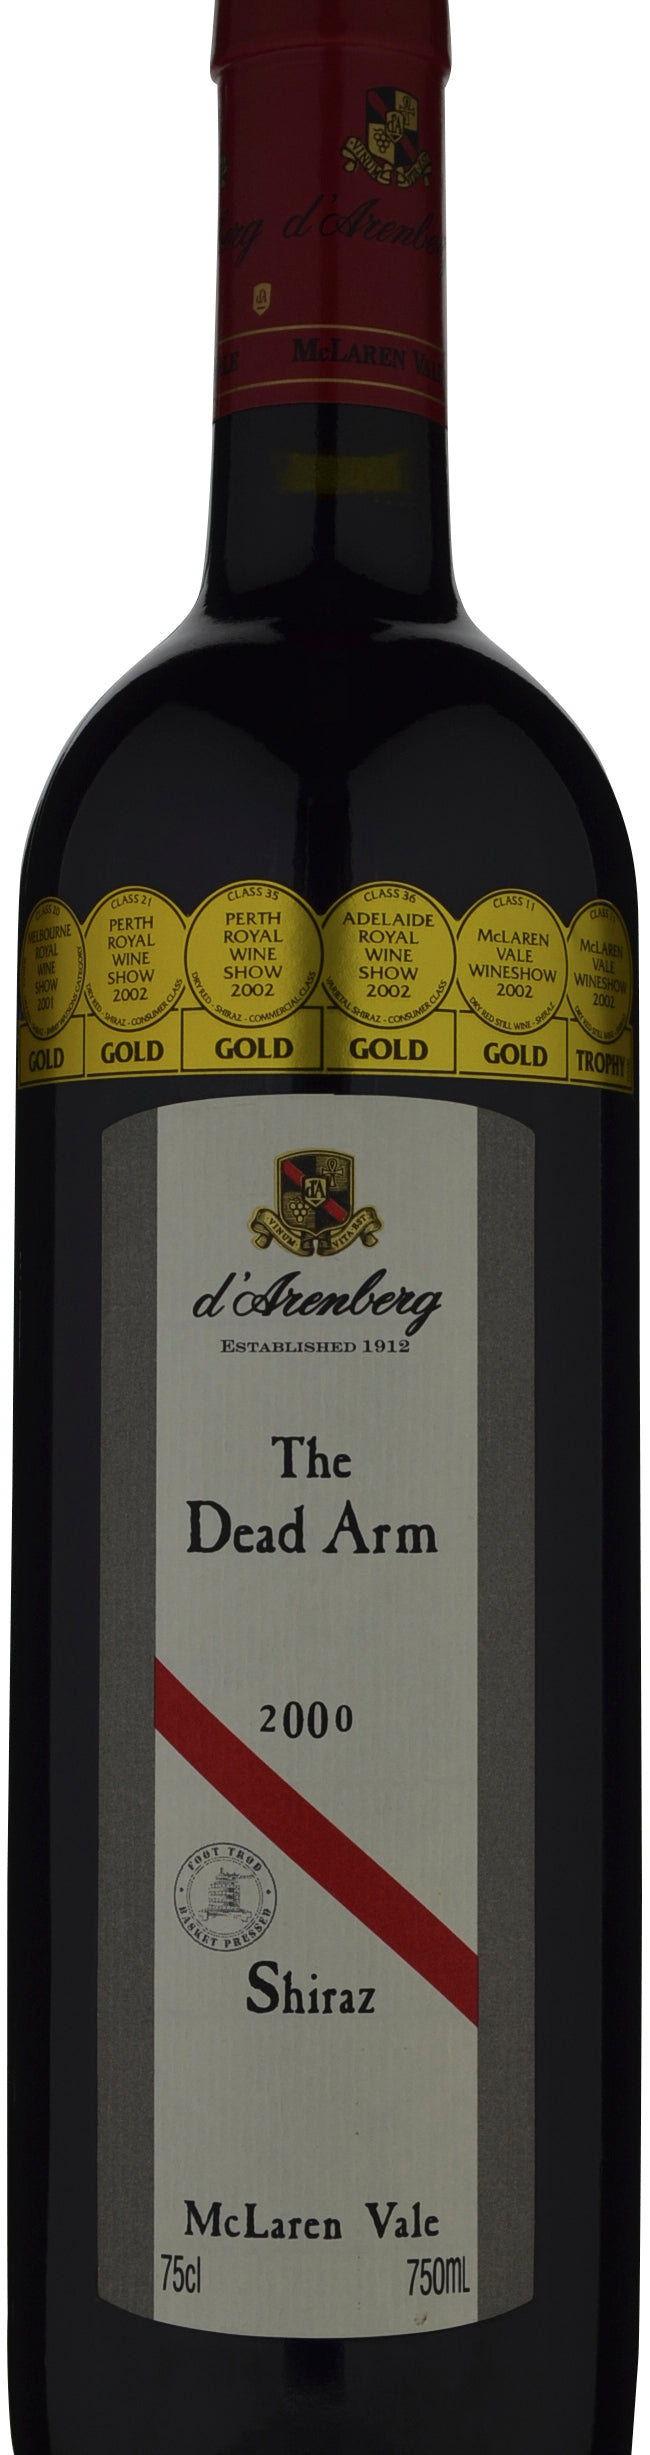 d'Arenberg The Dead Arm Shiraz 2000